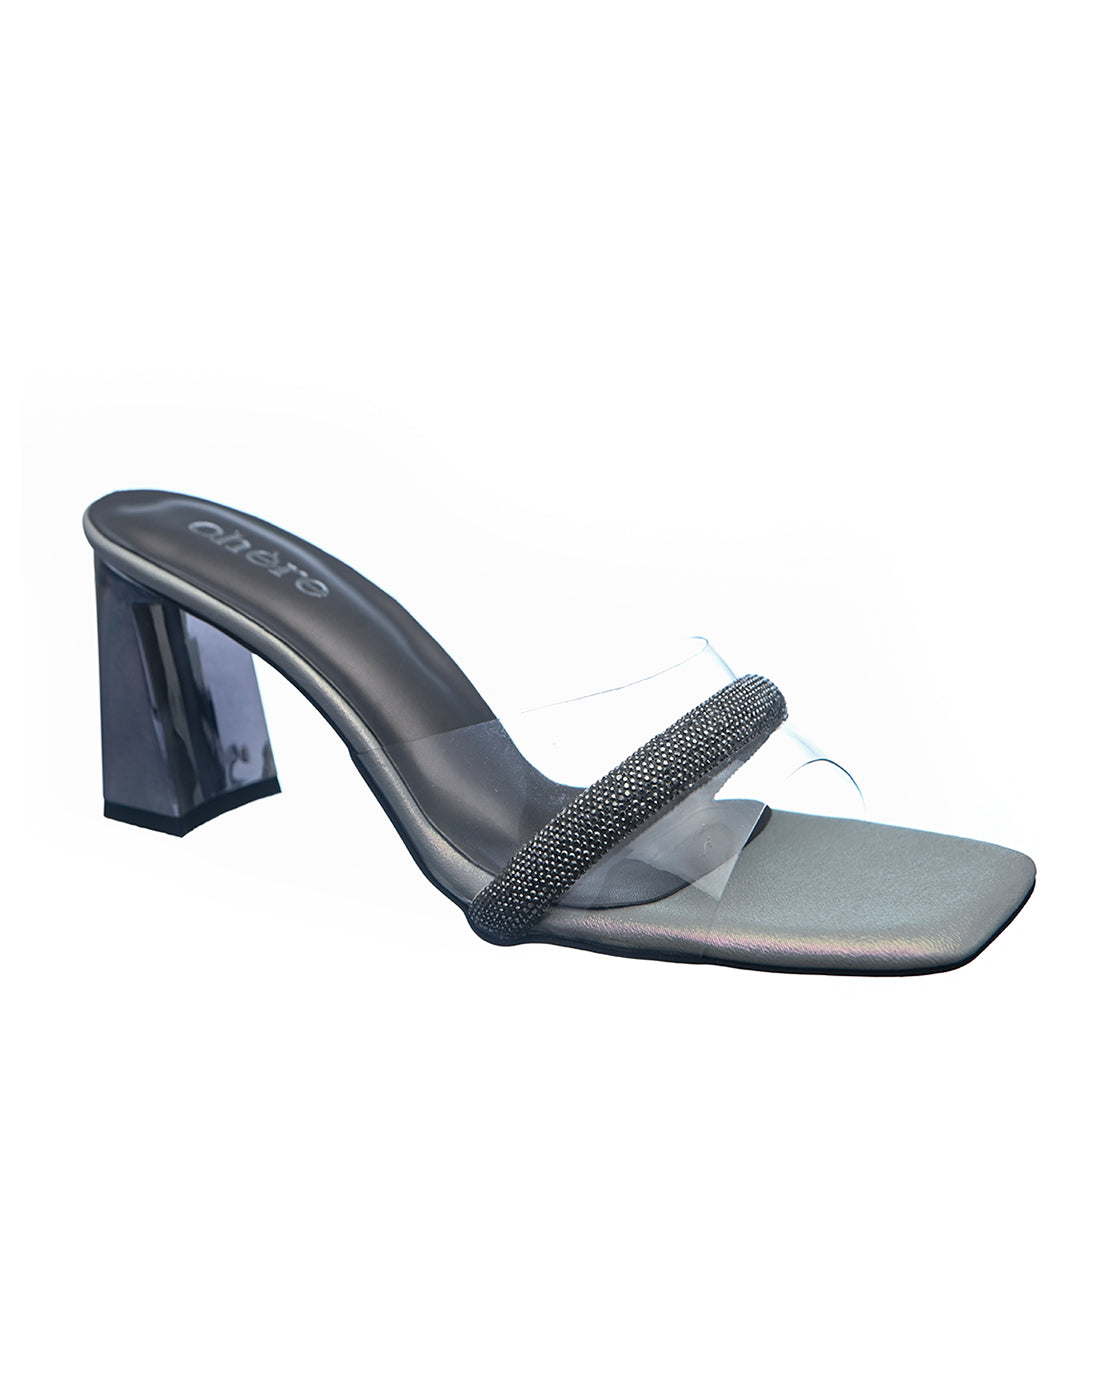 Buy Shezon Women's Grey Color Heels (V_8005_Grey_35) at Amazon.in